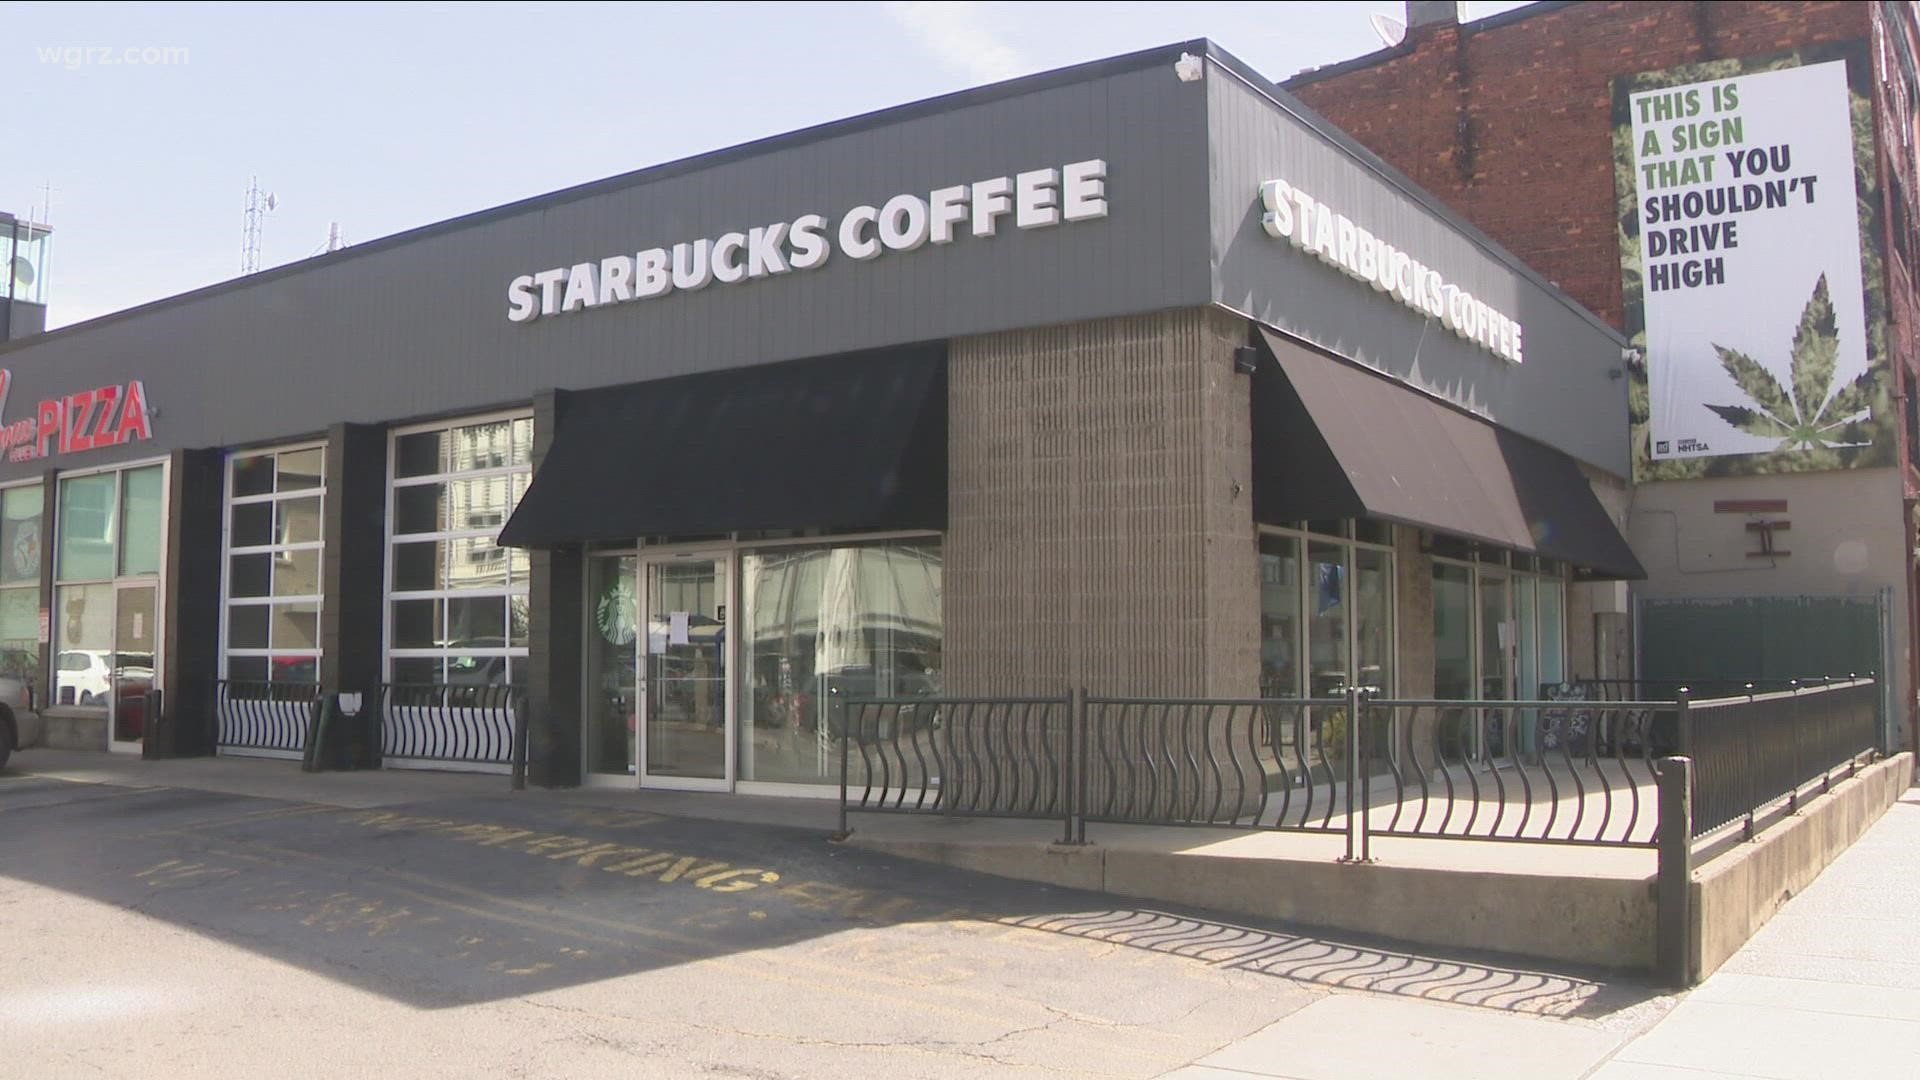 Delaware and Chippewa Starbucks location